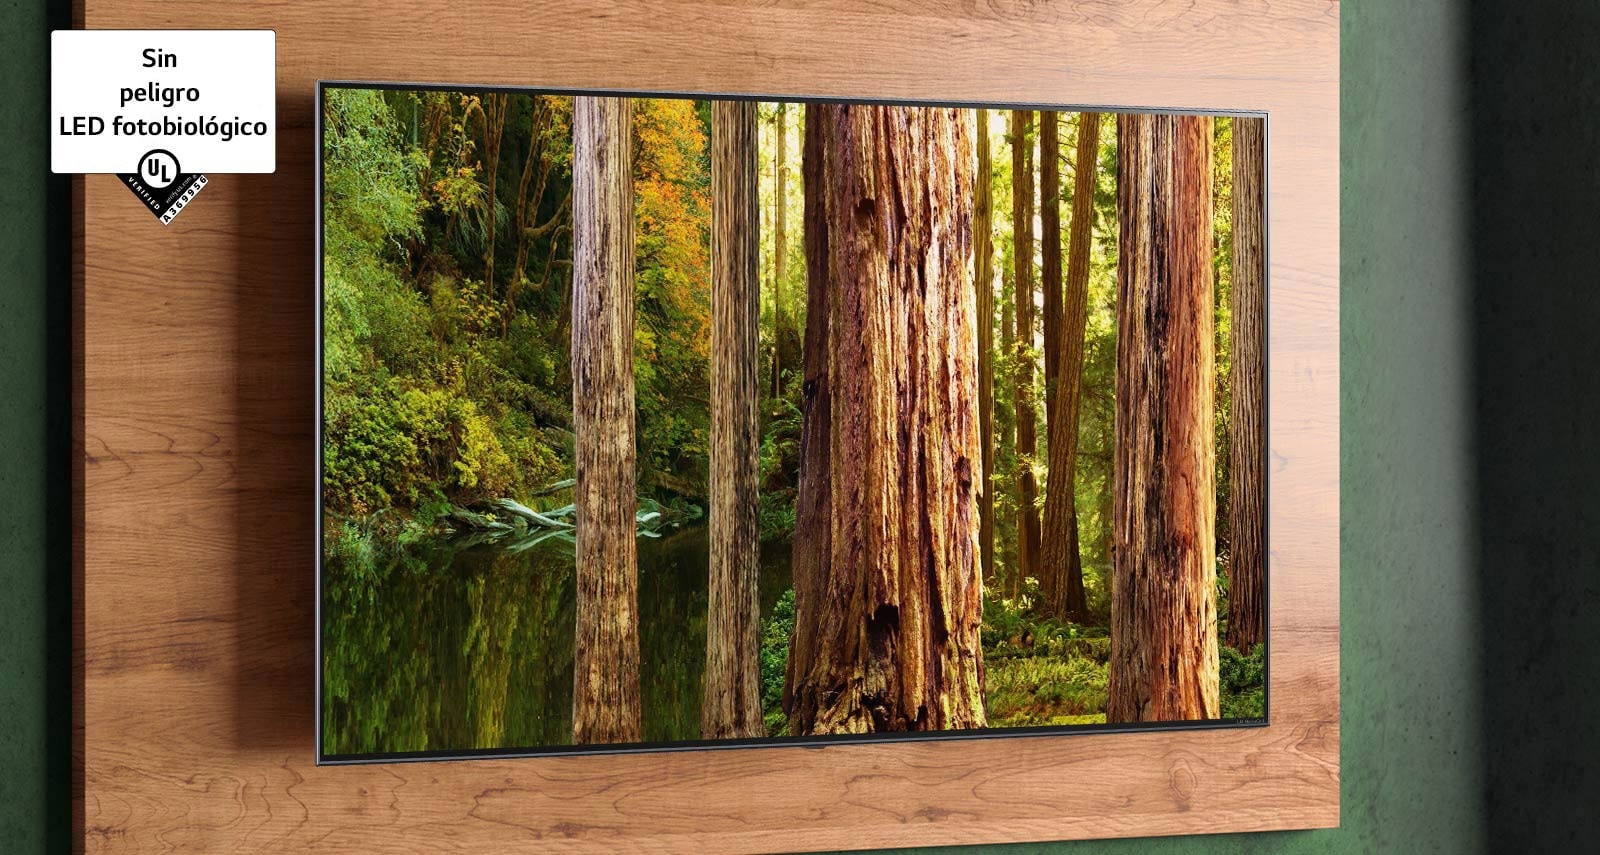 Imagen de un bosque en la pantalla del televisor